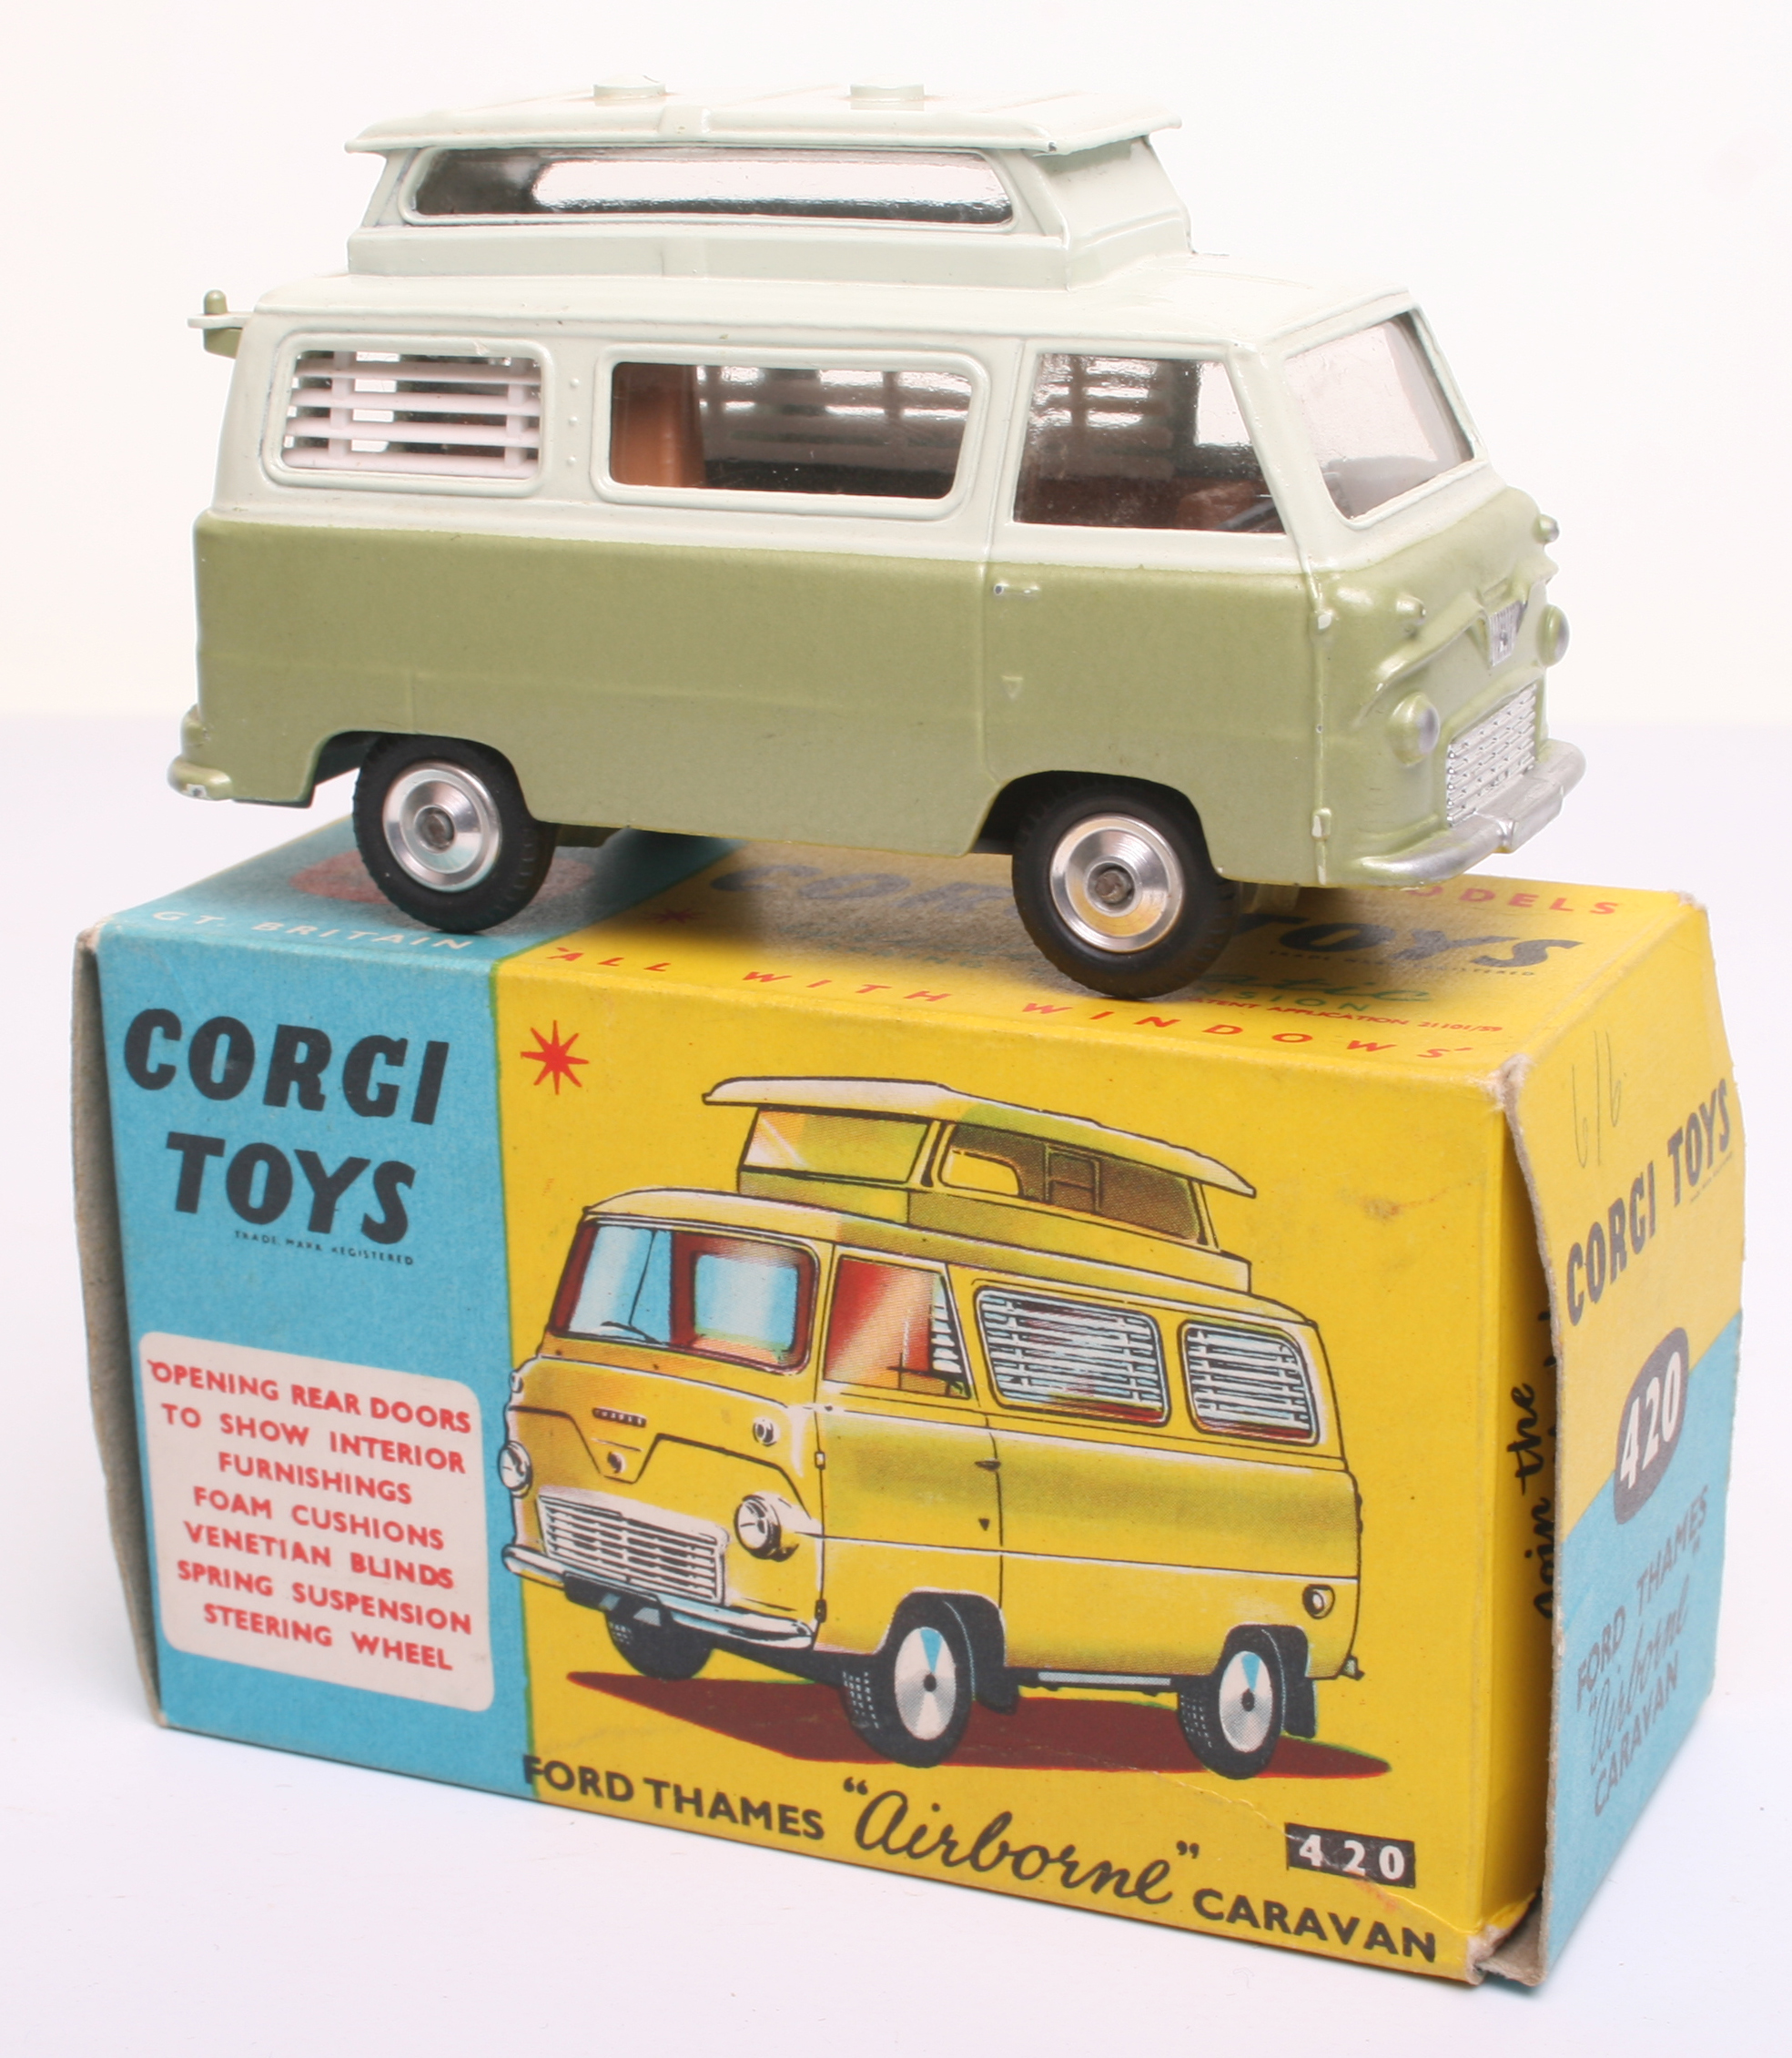 Corgi Toys 420 Ford Thames Airbourne Caravan, metallic olive green/apple white body, brown